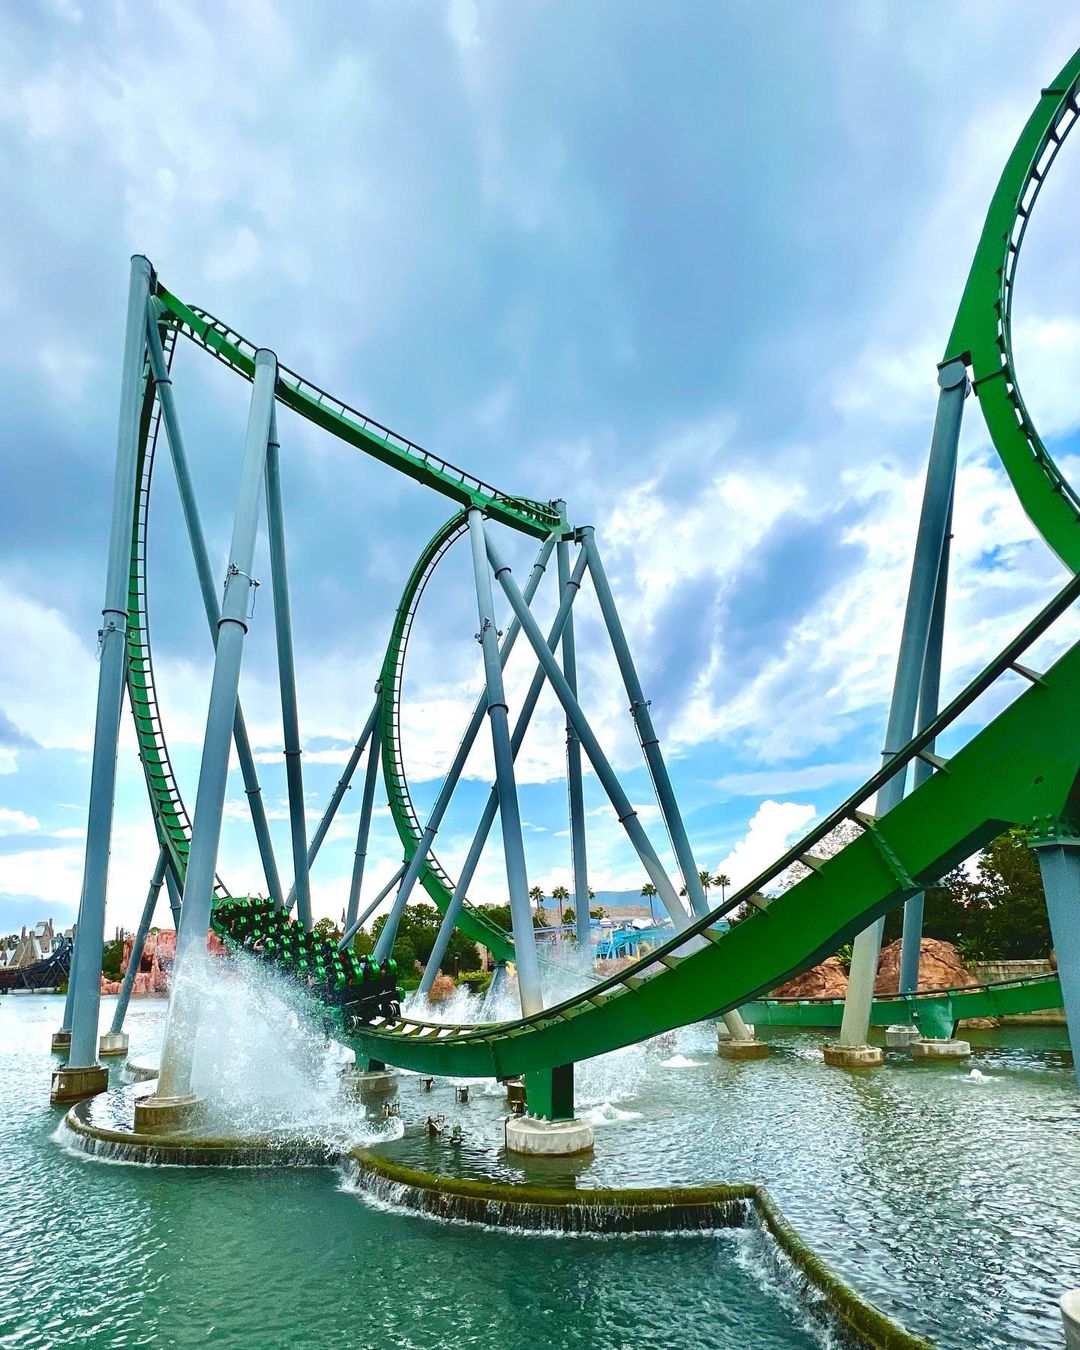 Hulk roller coaster